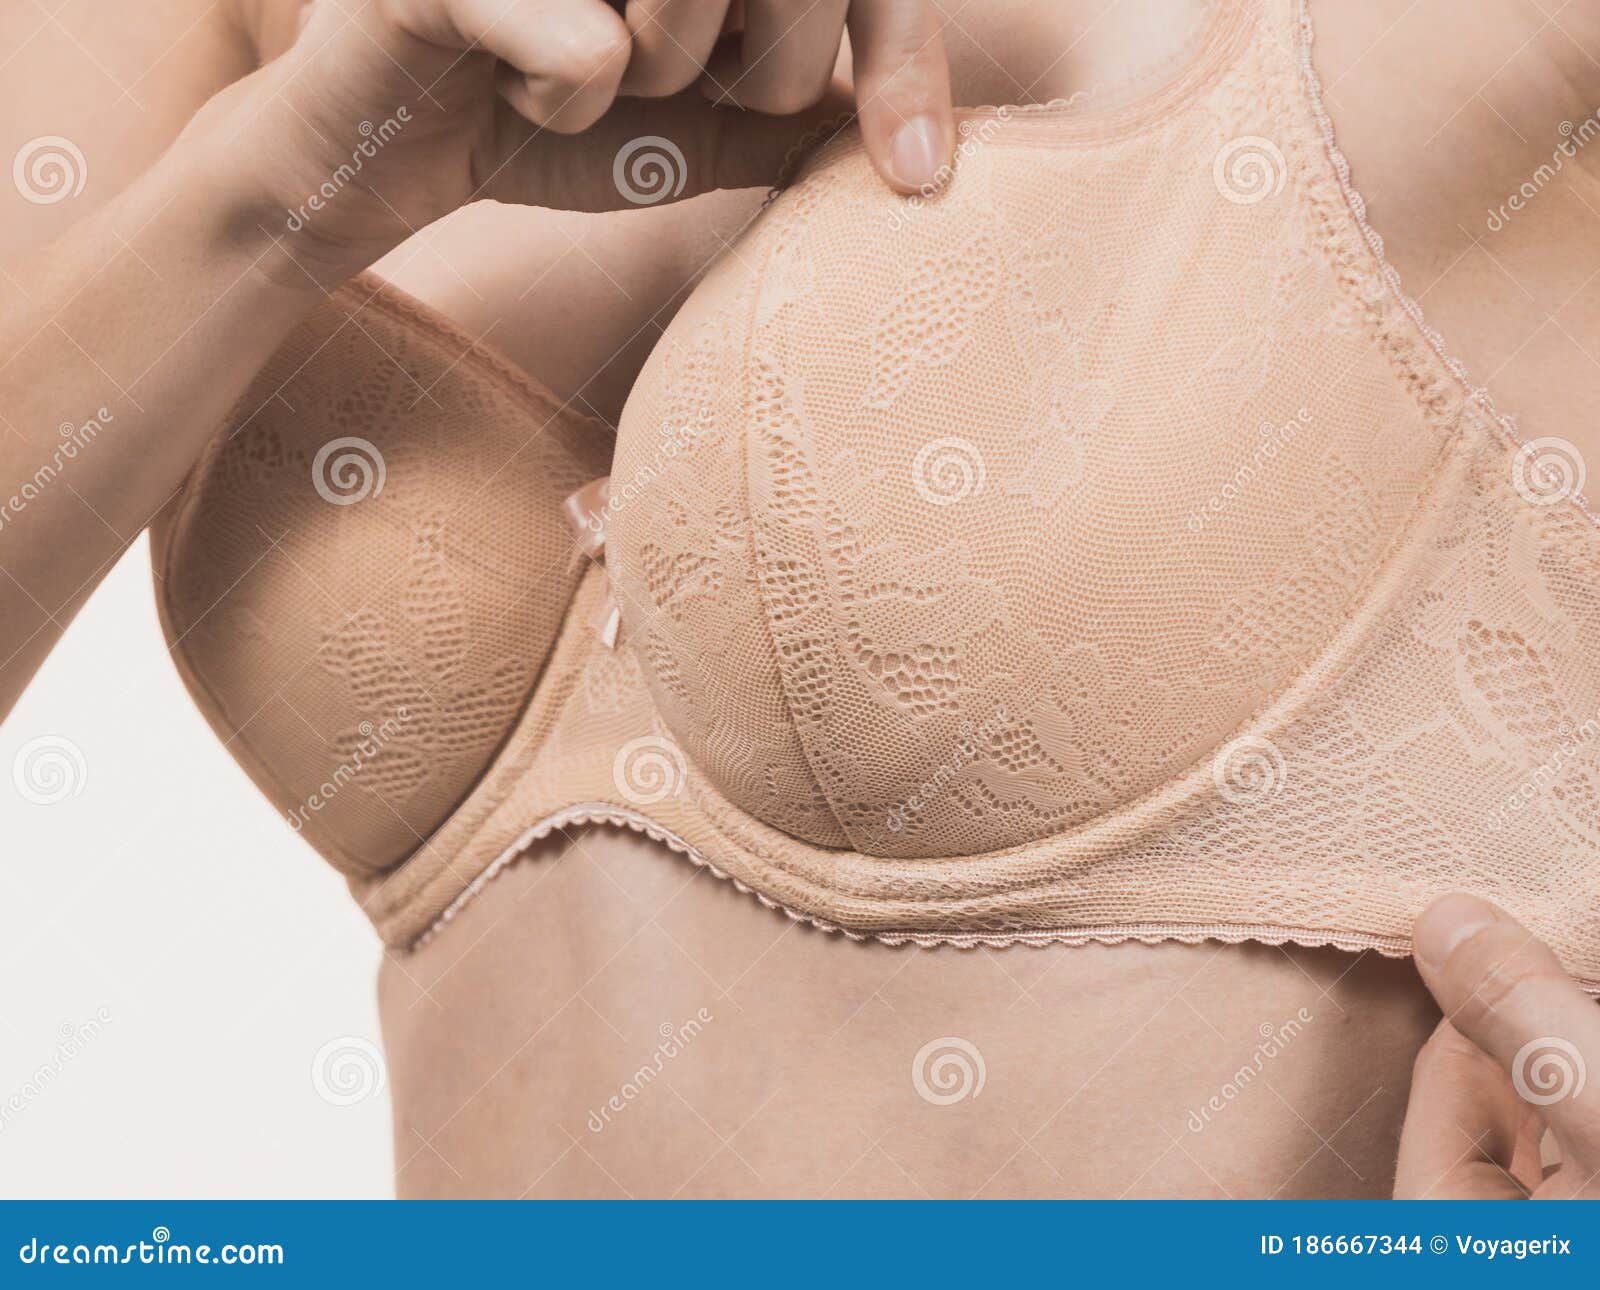 Female Wearing Too Big Bra, Wrong Size Stock Photo - Image of band